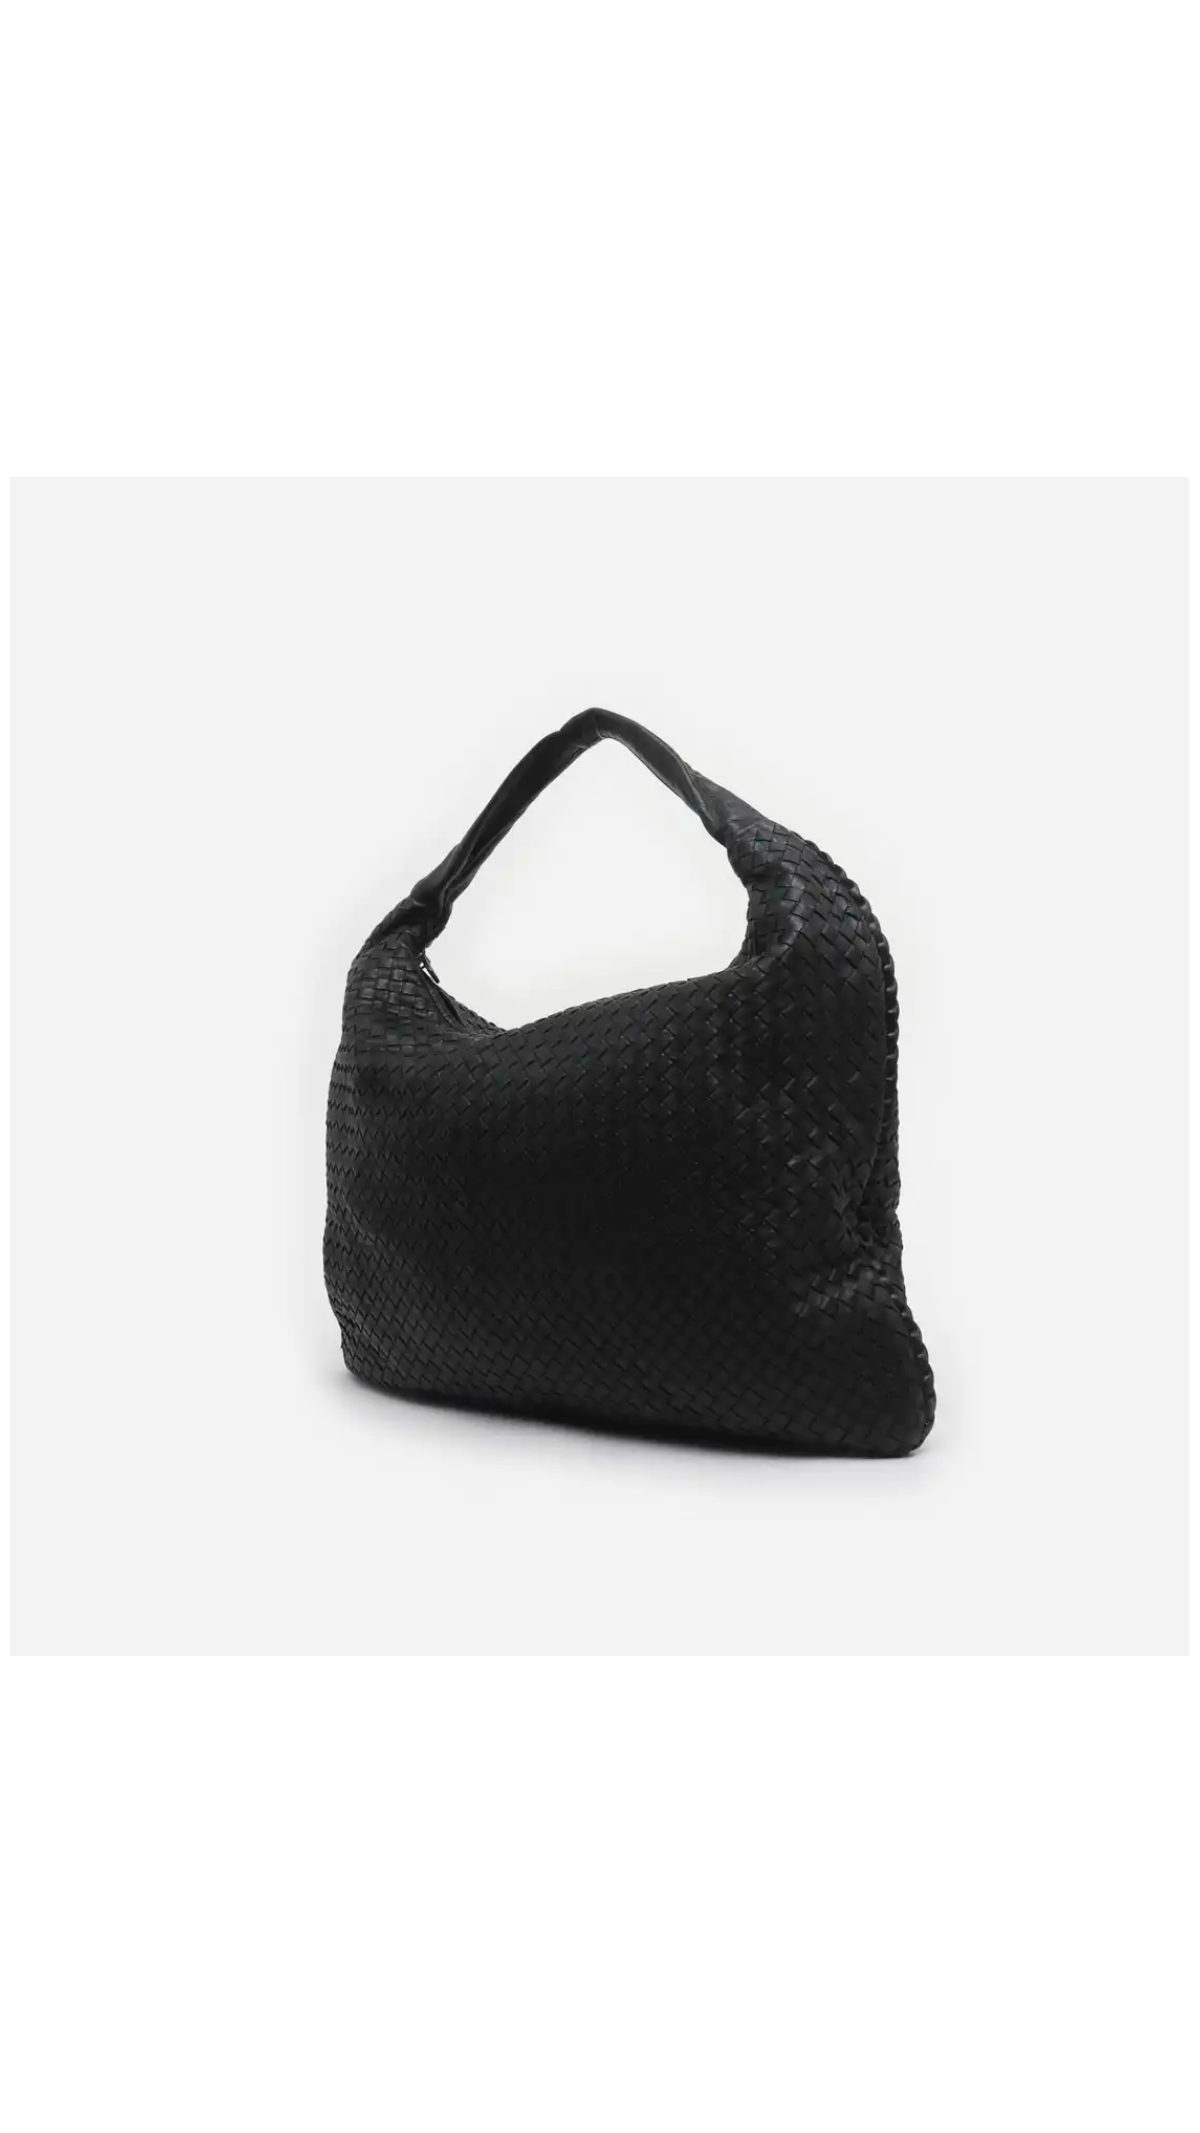 Bottega Veneta Hobo Bag Size Maxi